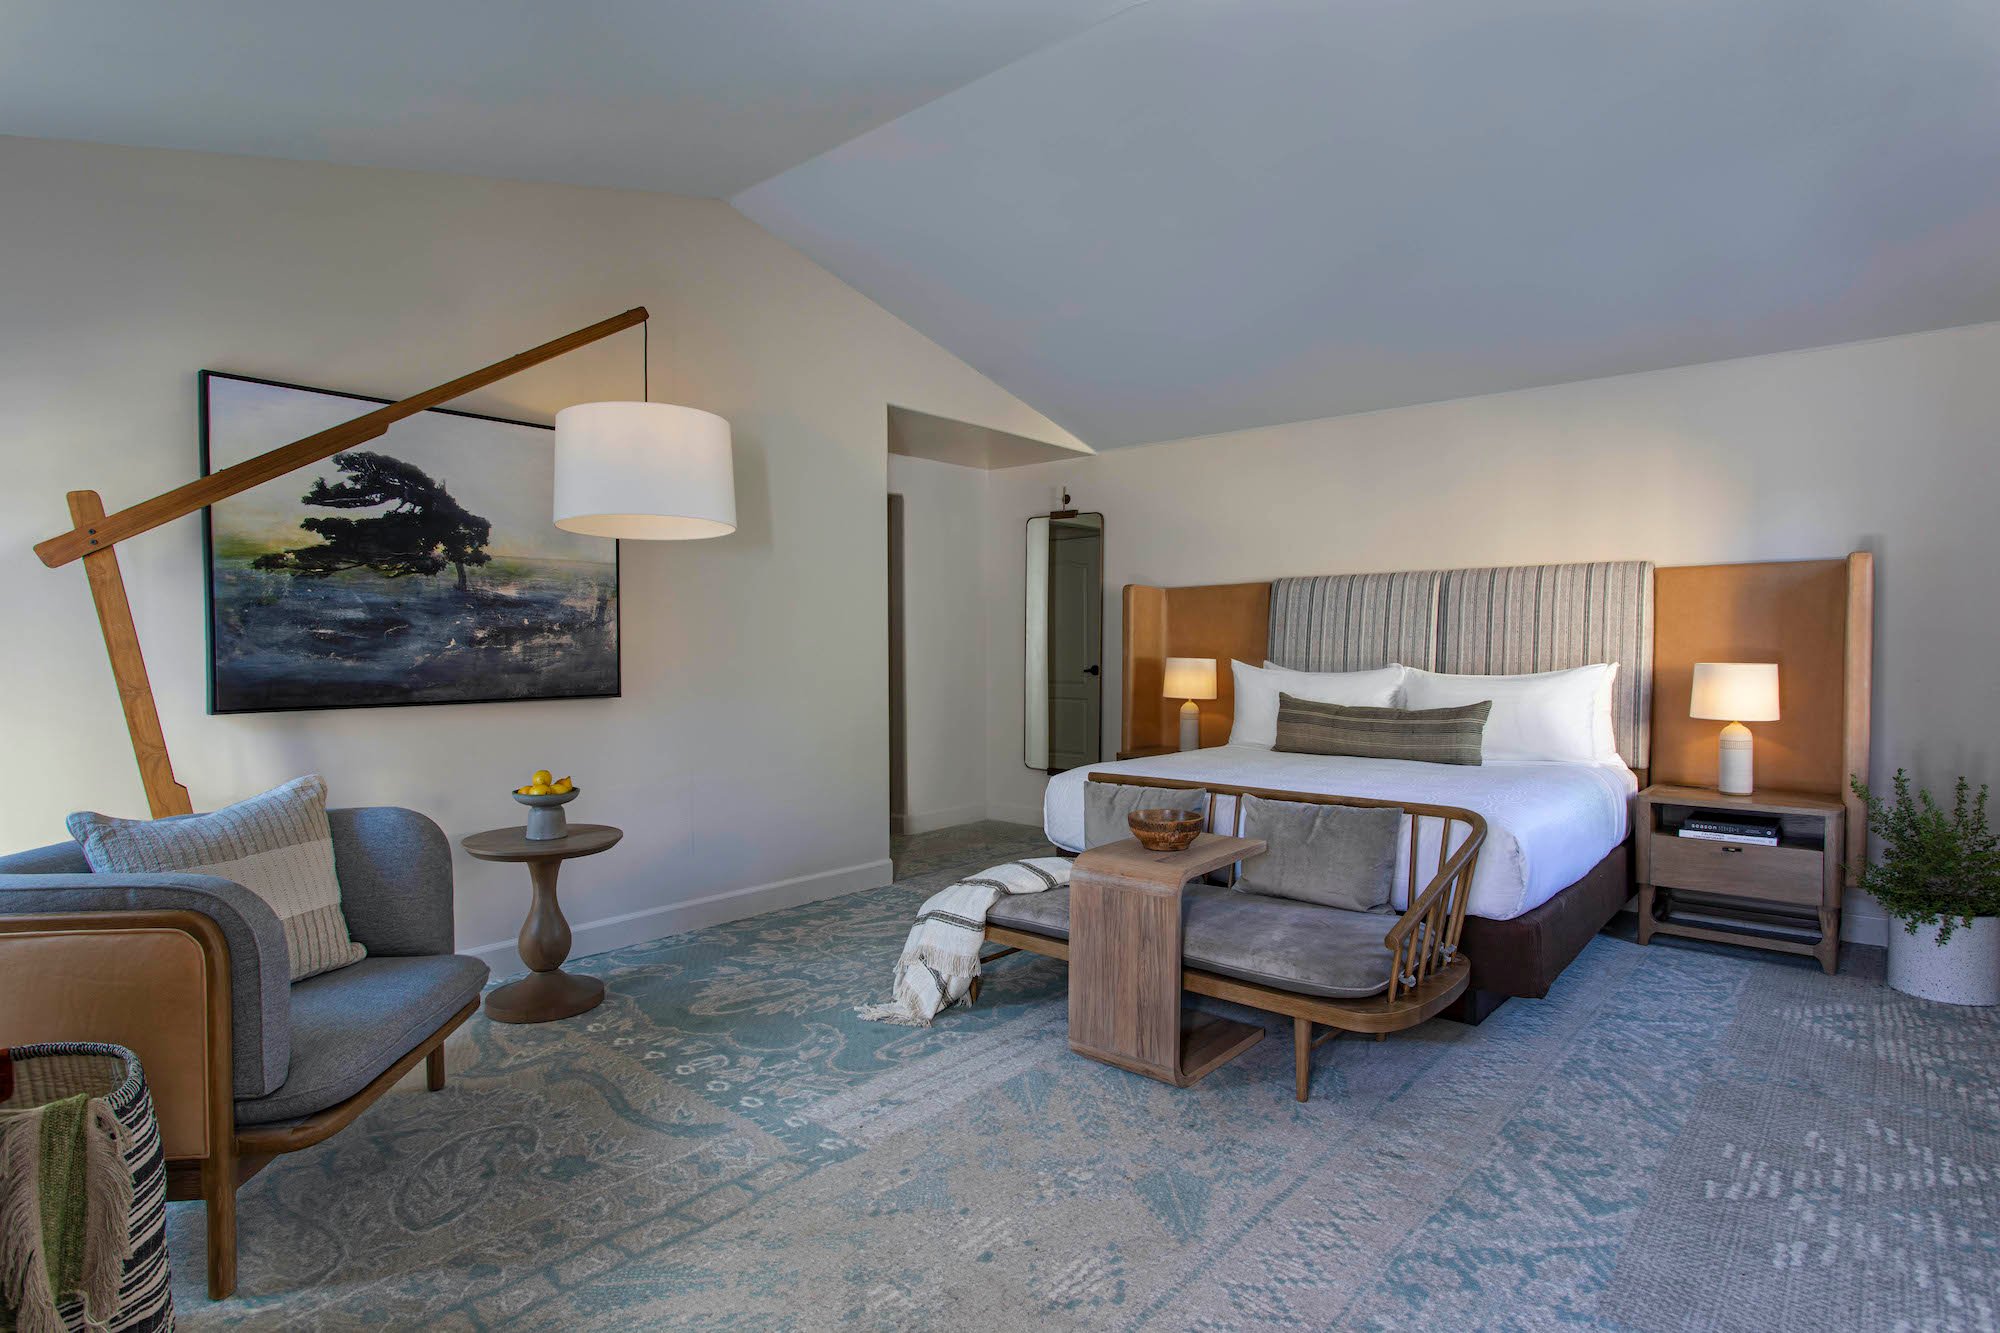 The Lodge at Sonoma  A Luxury Sonoma Resort & Spa Retreat